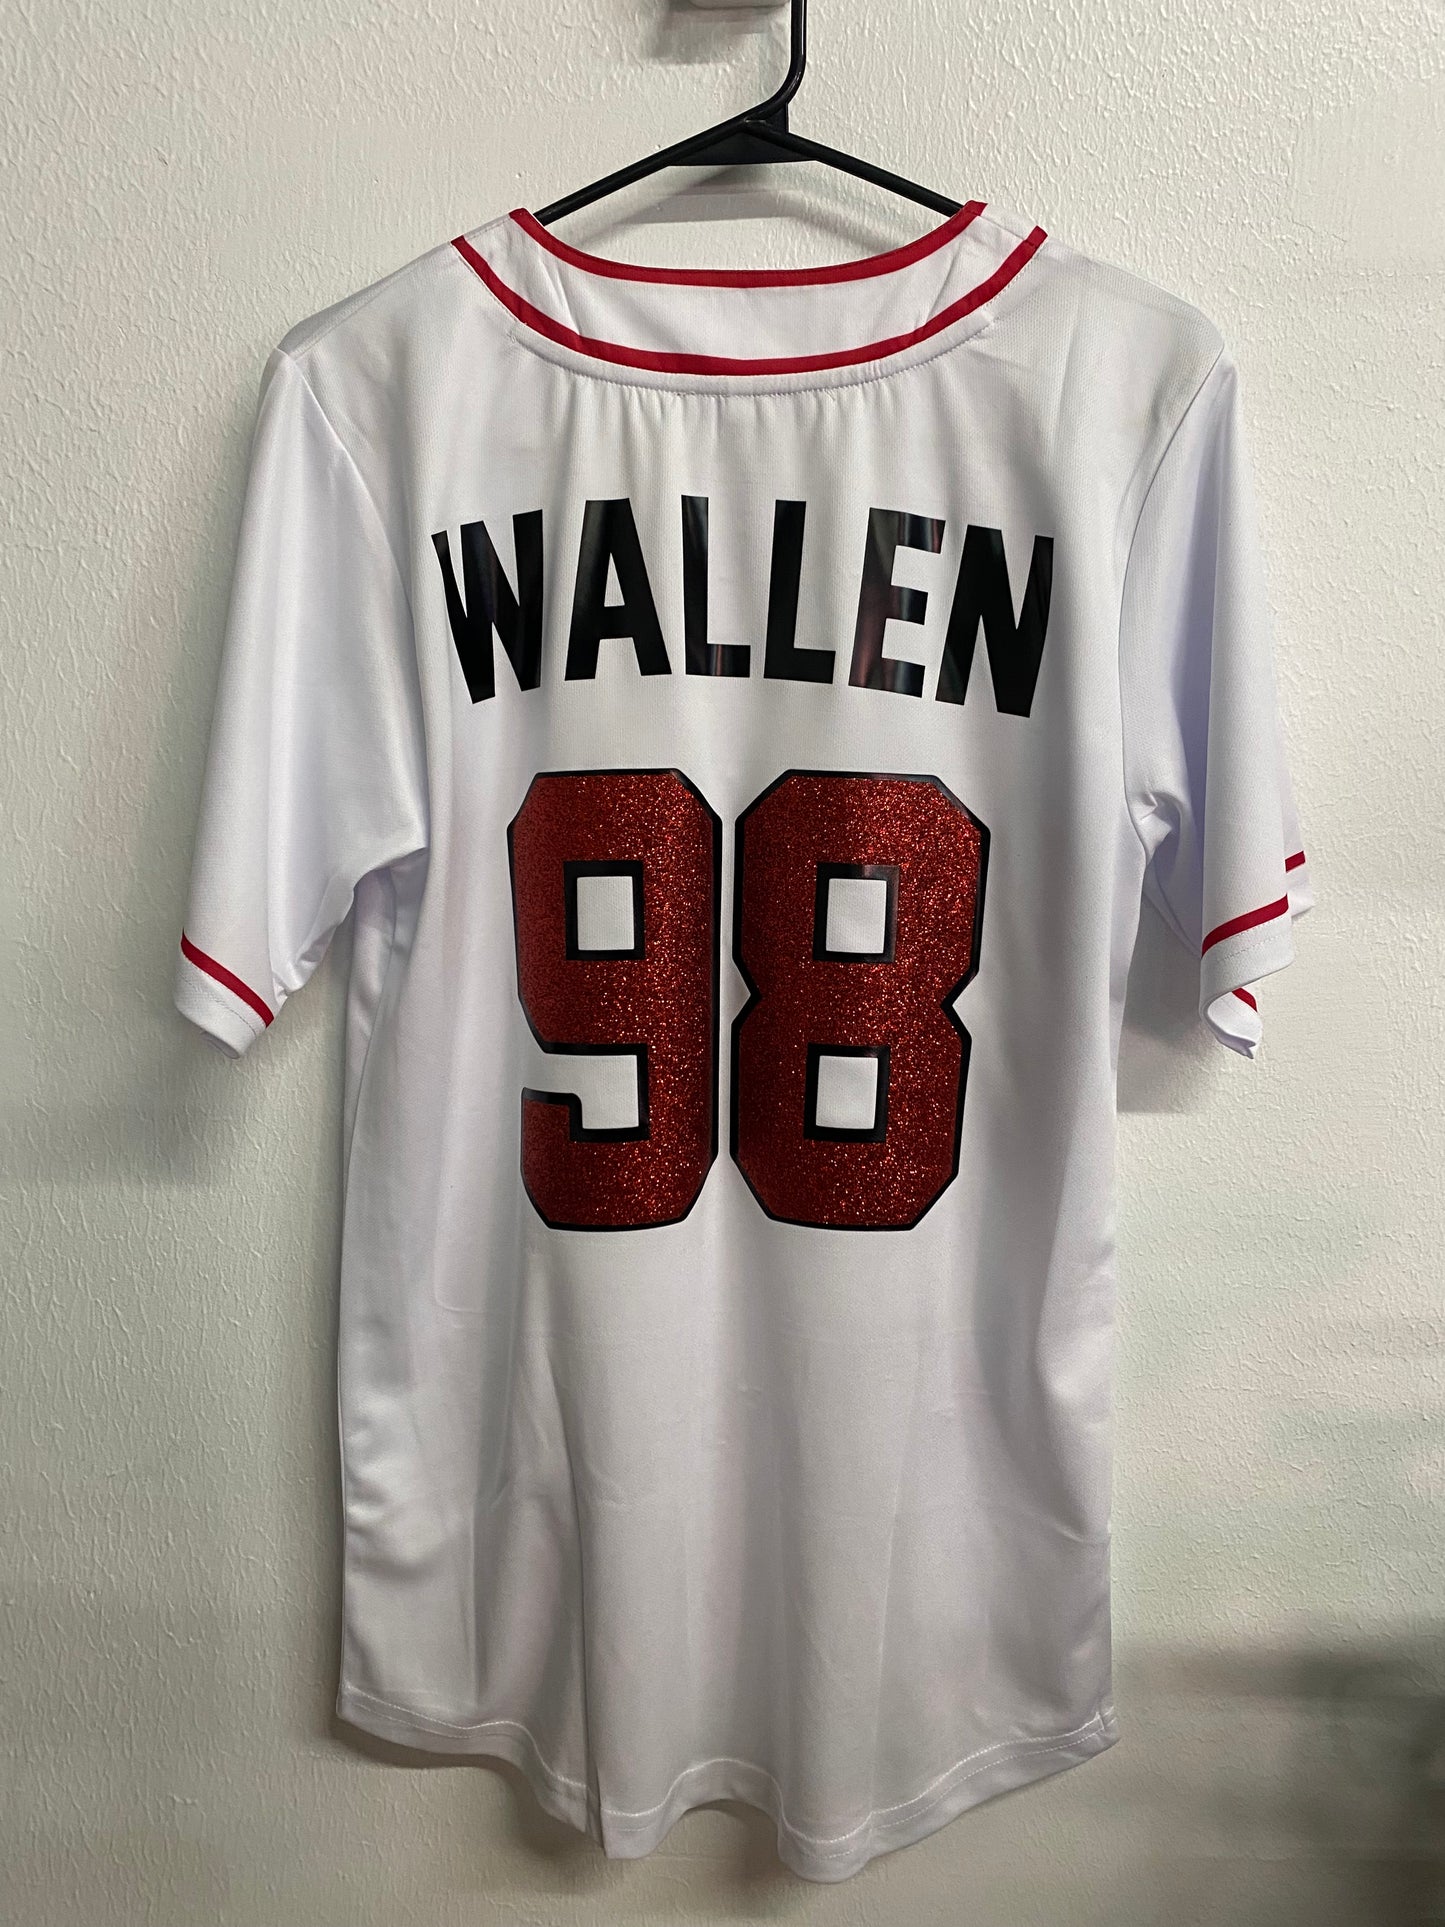 Wallen 98 Jersey